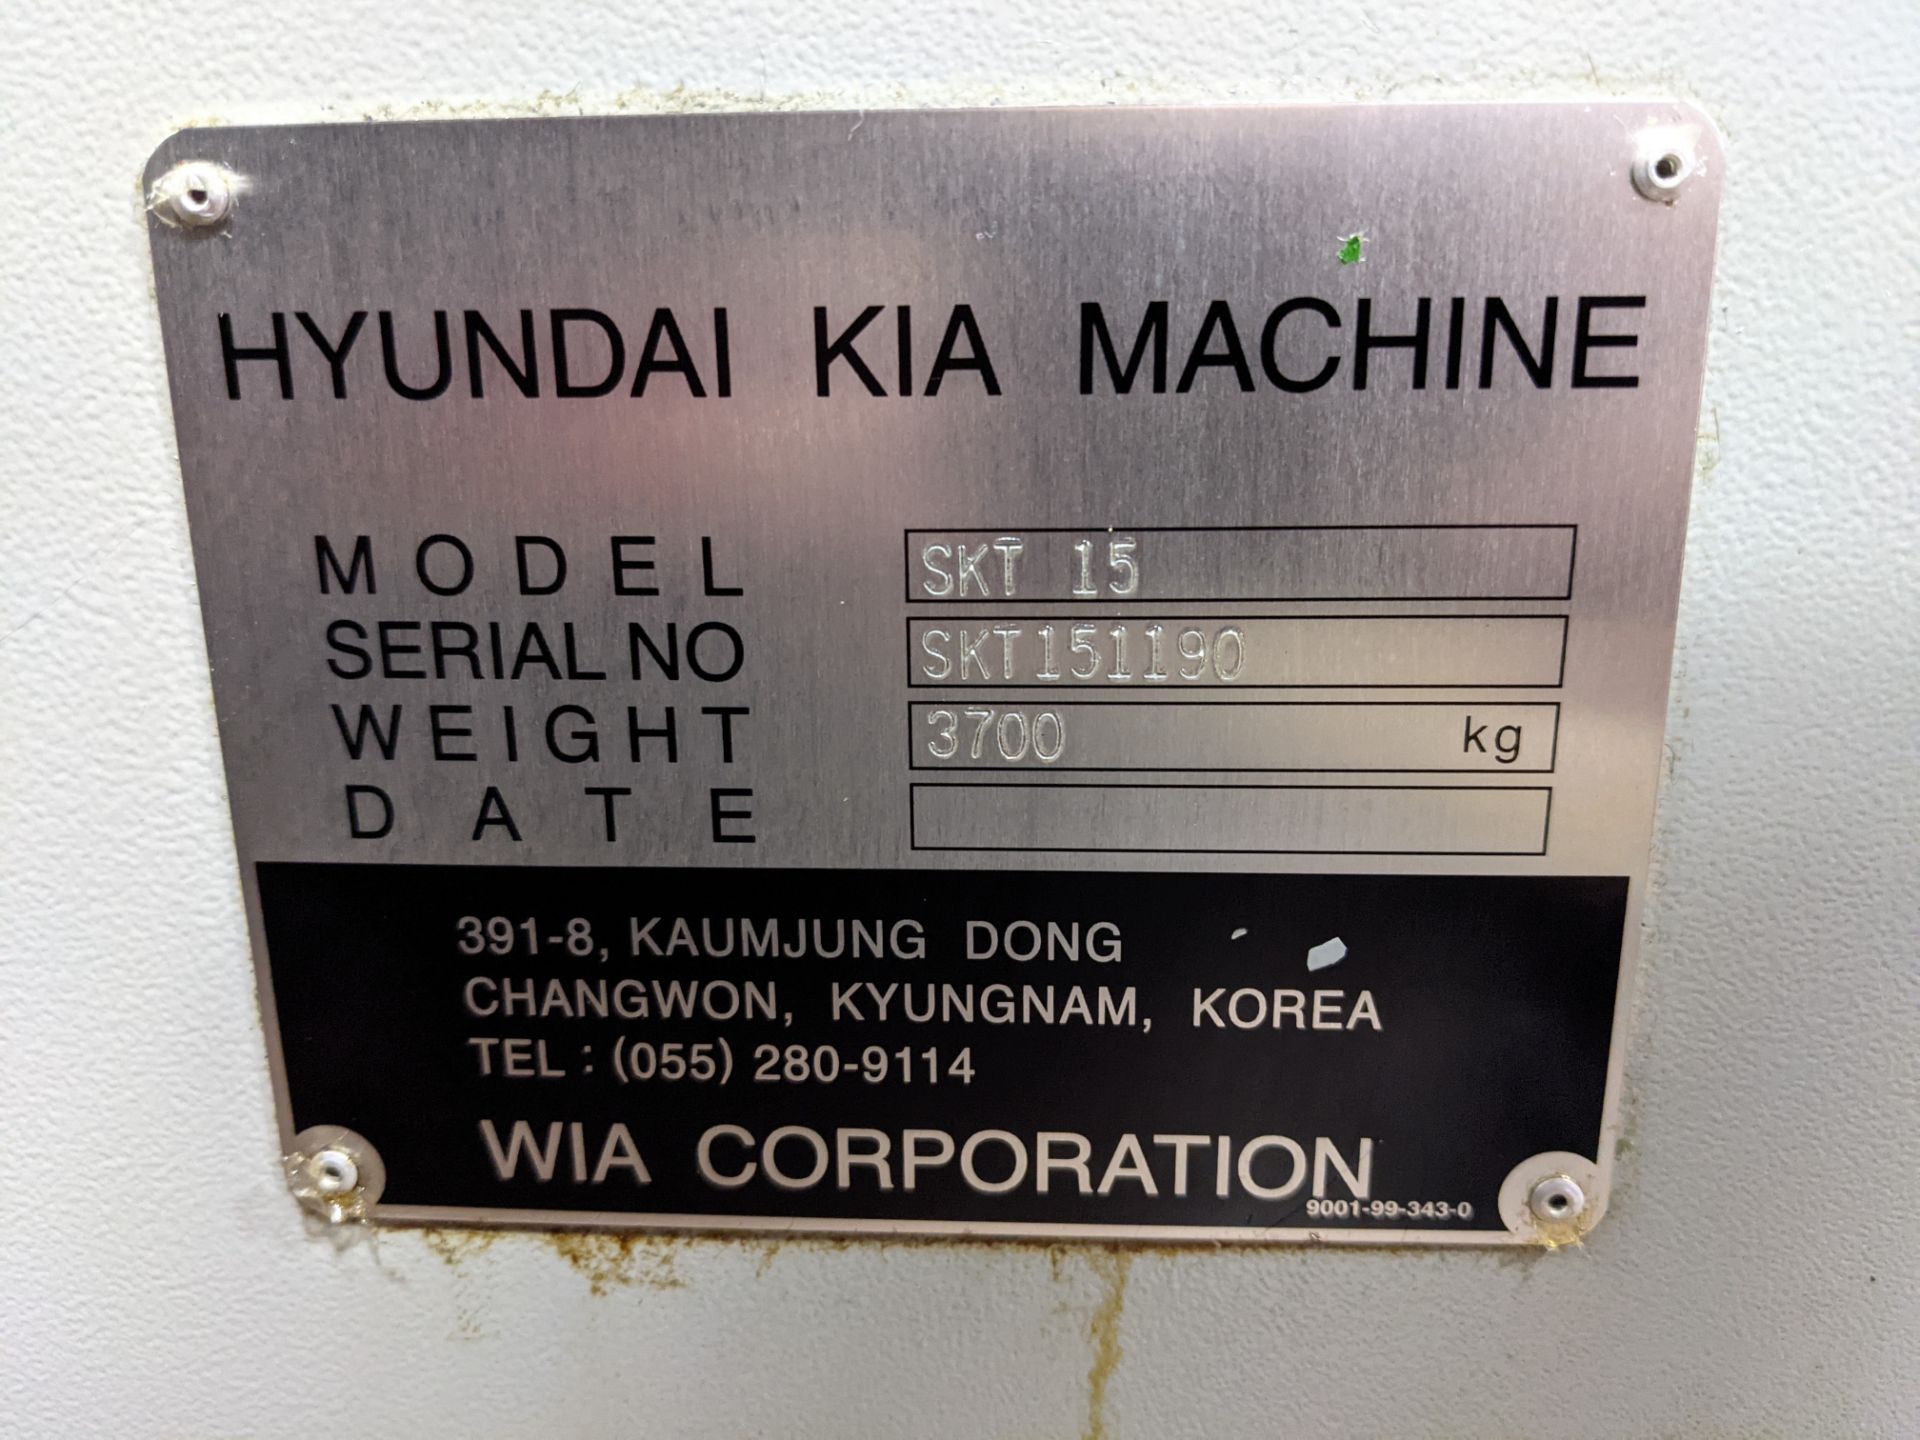 2006 HYUNDAI KIA SKT-15 CNC TURNING CENTER WITH FANUC OI-TC CNC CONTROL, 21.6” SWING OVER BED, 5,000 - Image 13 of 17